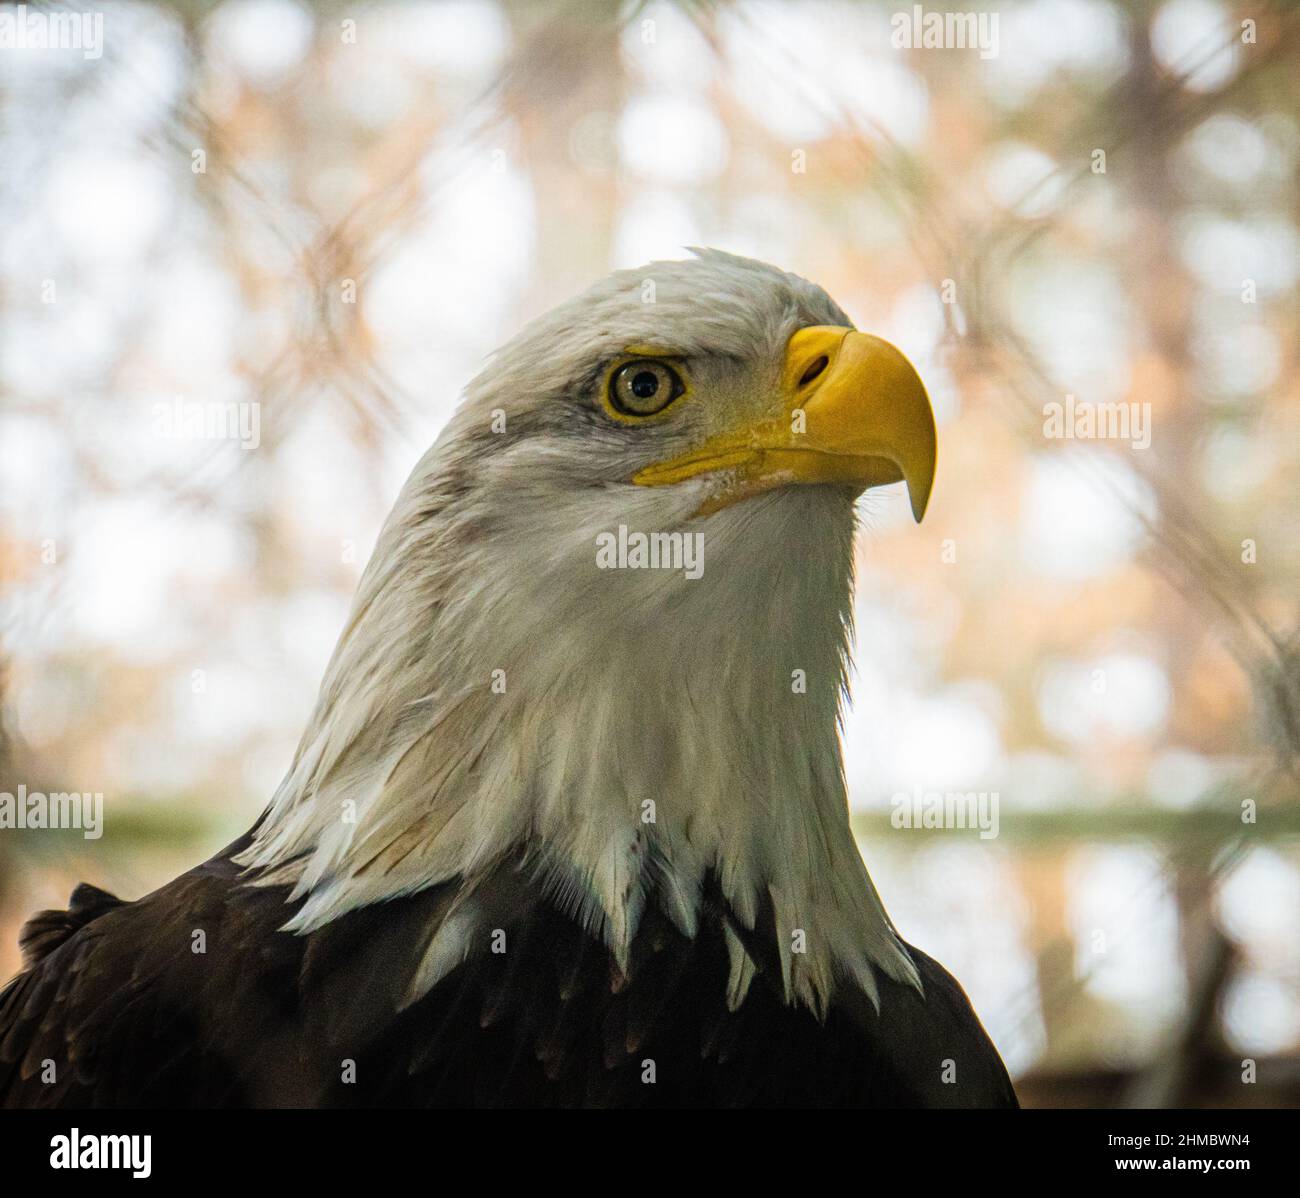 cabeza regal de un águila calva americana con pico prominente Foto de stock